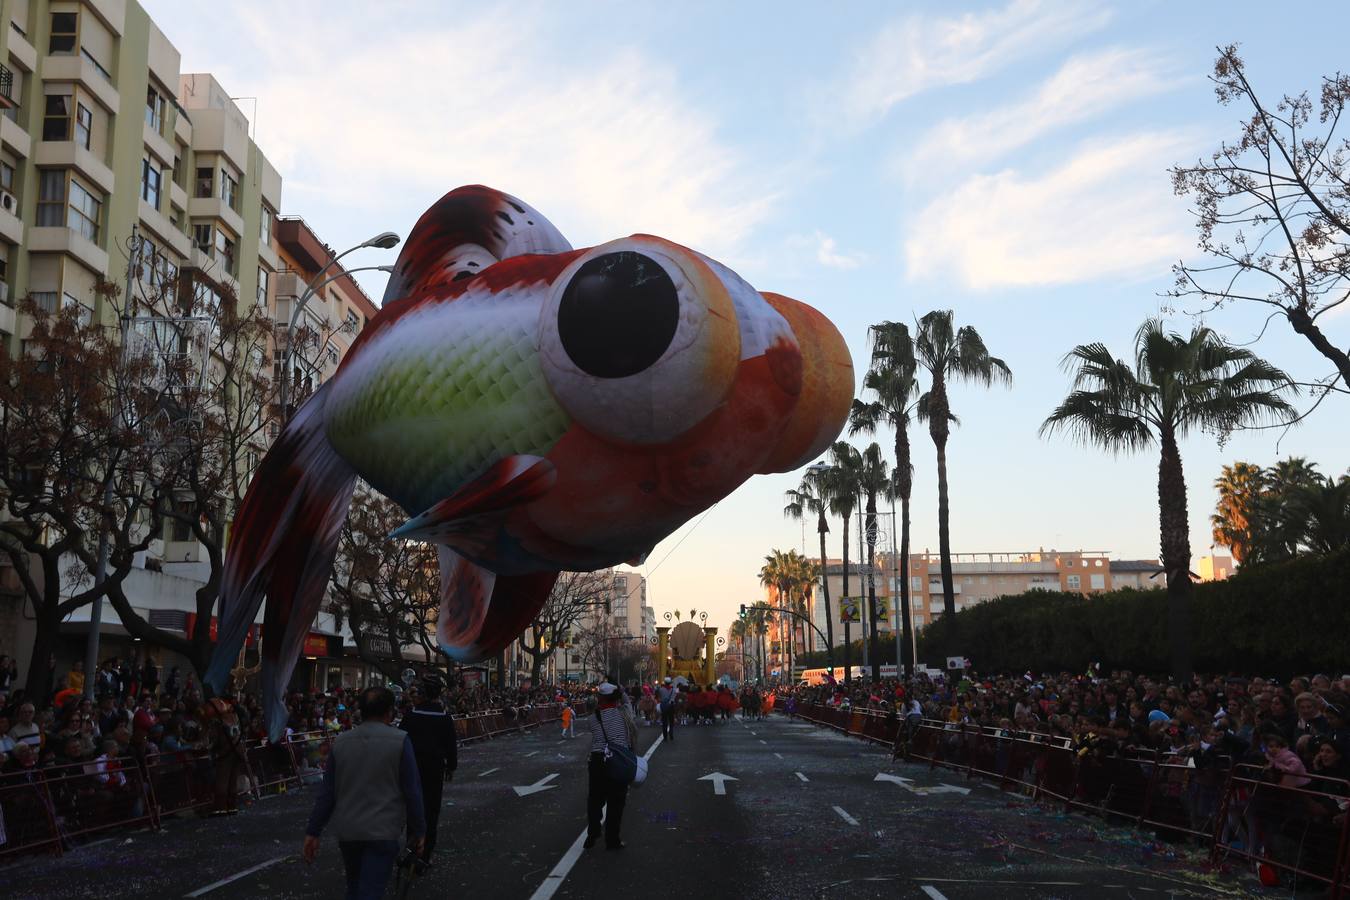 En imágenes: La Gran Cabalgata del Carnaval de Cádiz 2019